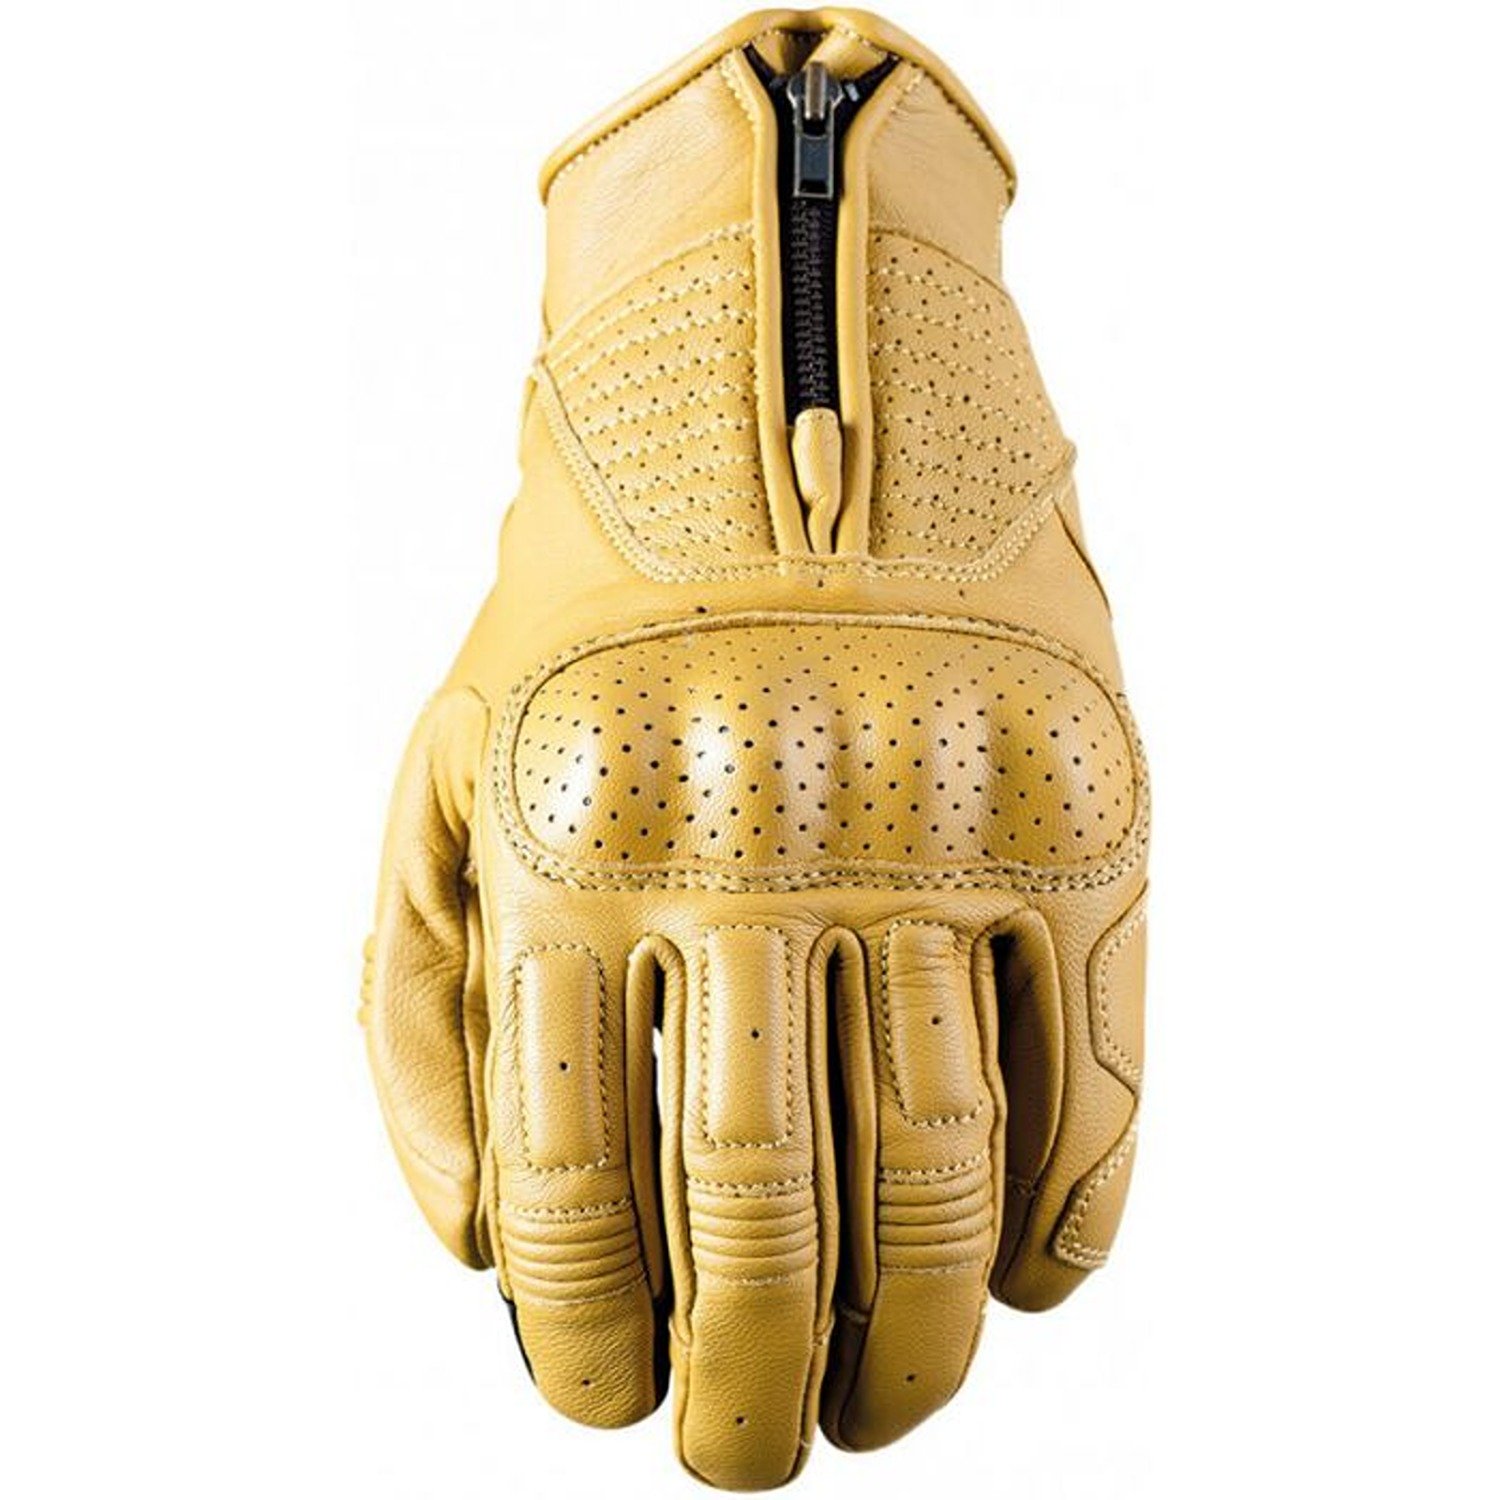 Image of Five Kansas Gloves Beige Size M ID 4770916485319